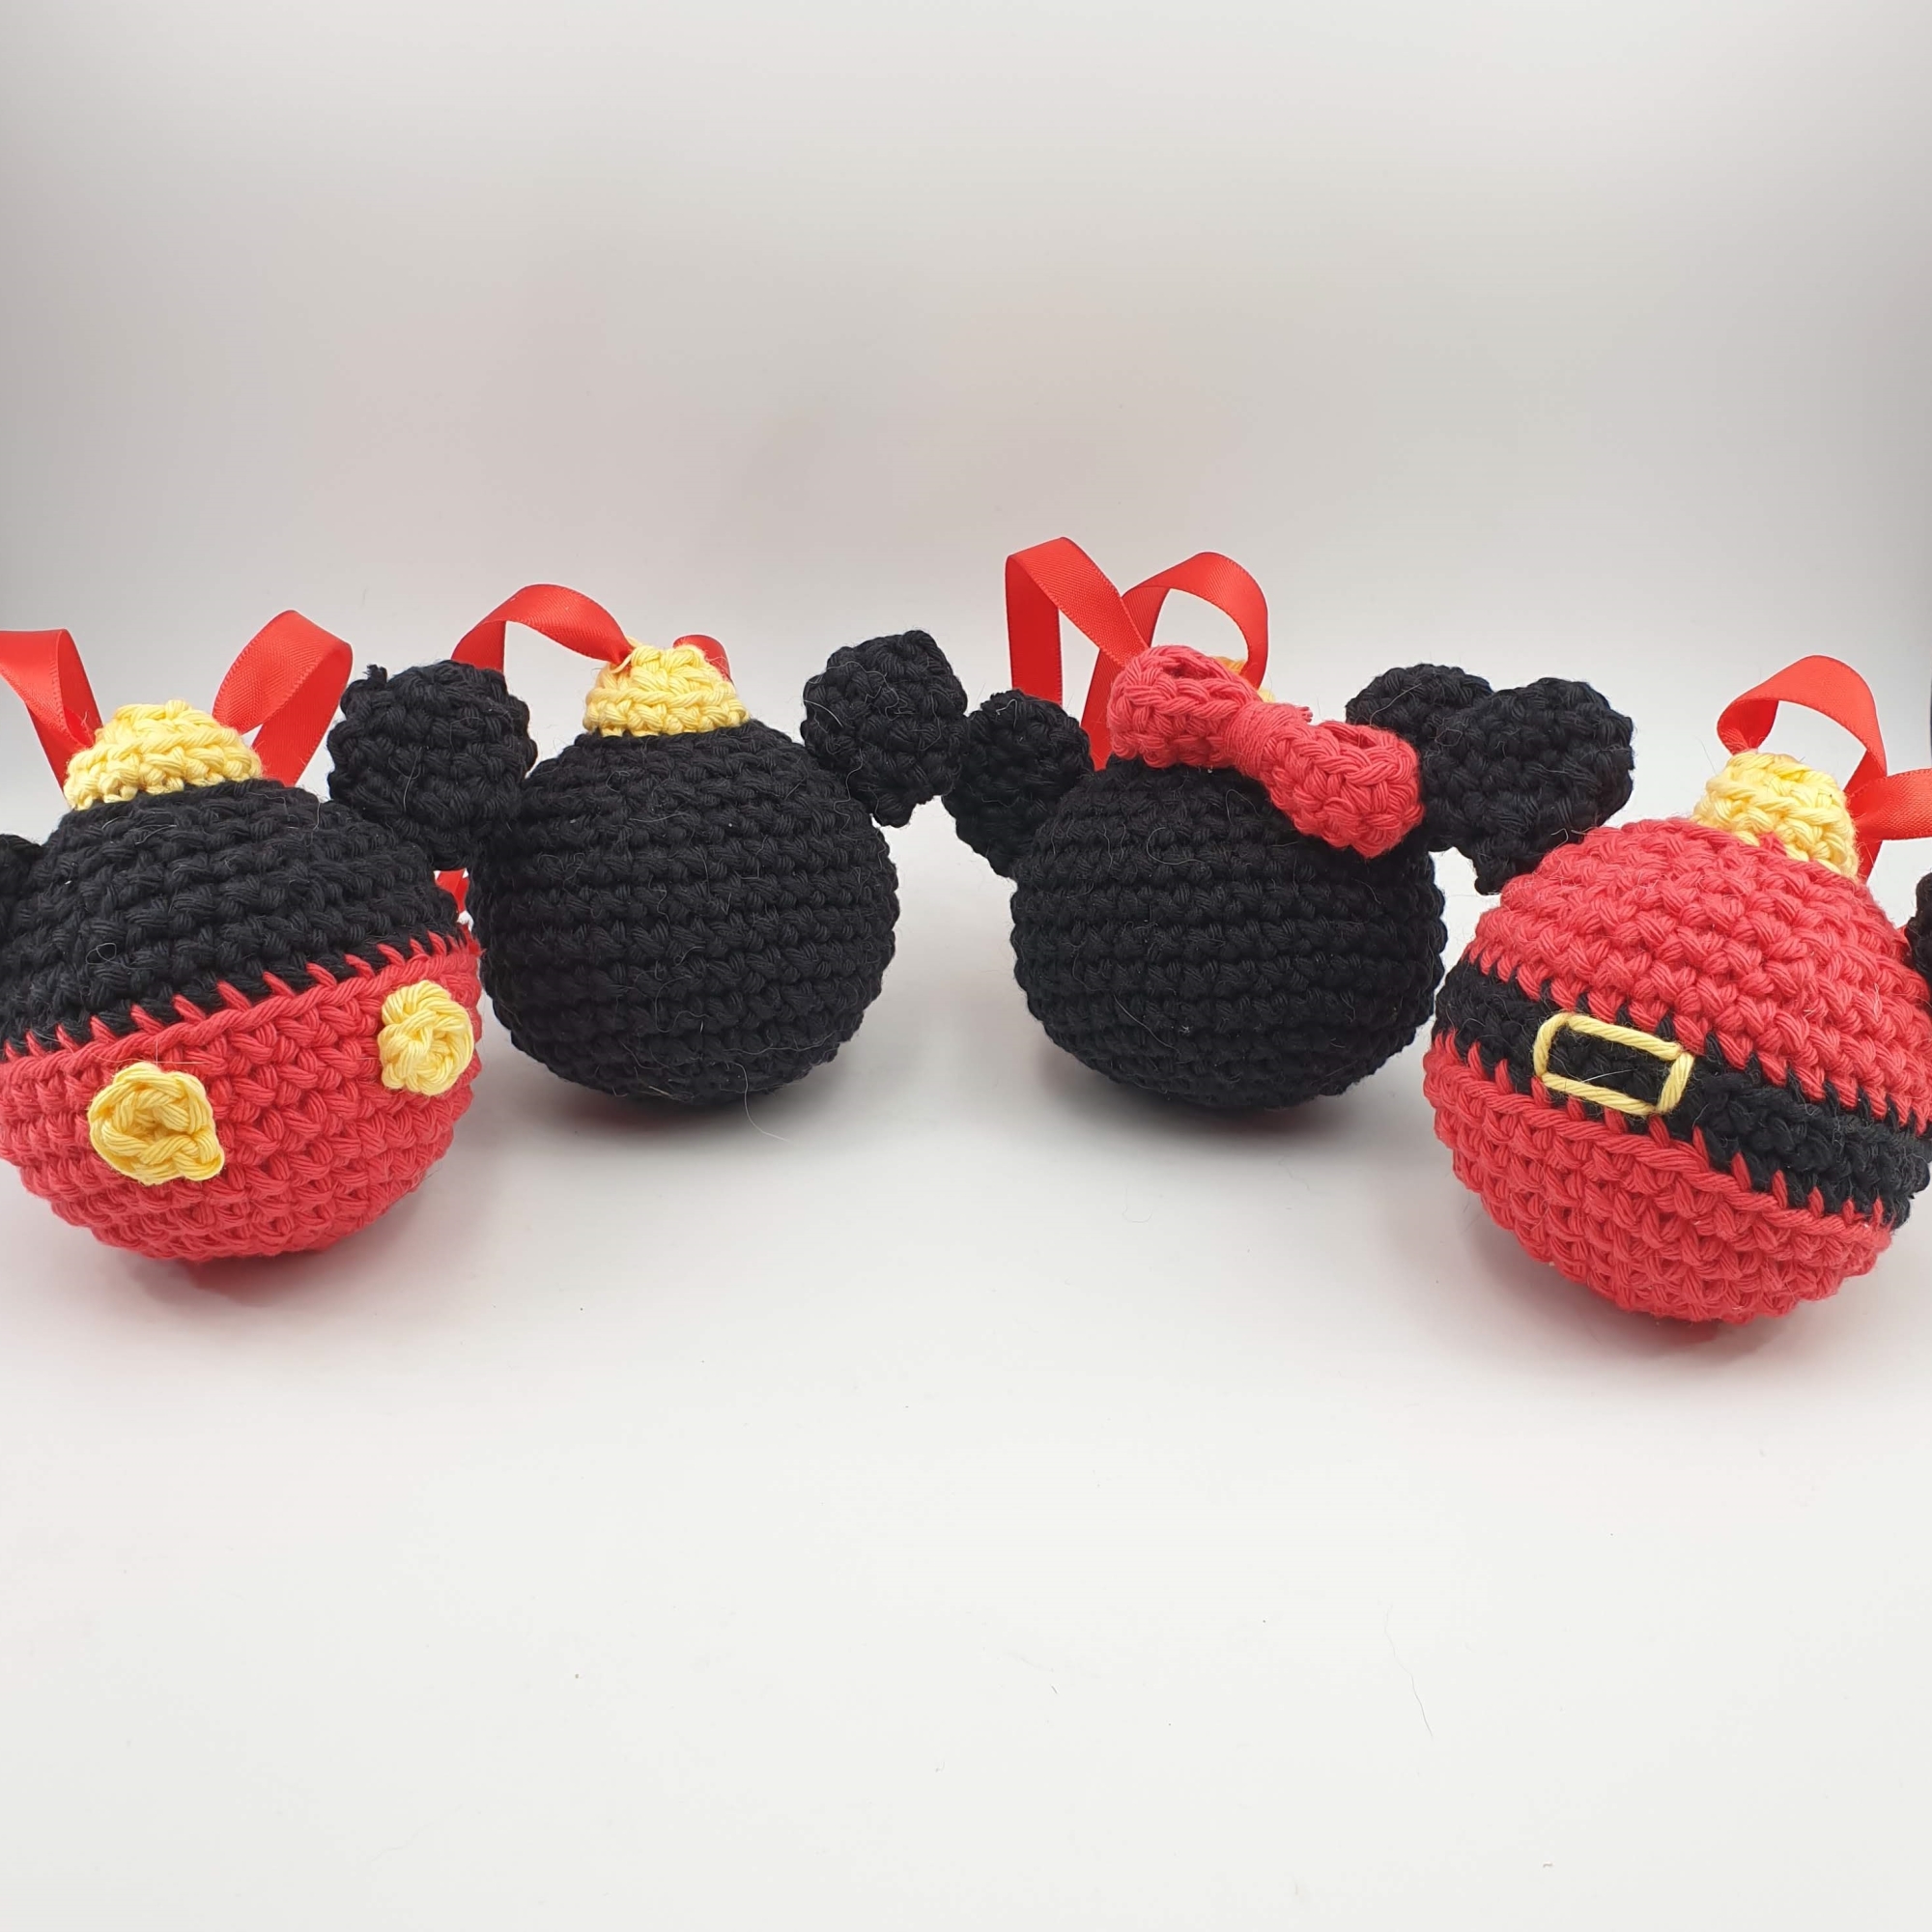 Super Cute Free Disney Crochet Patterns